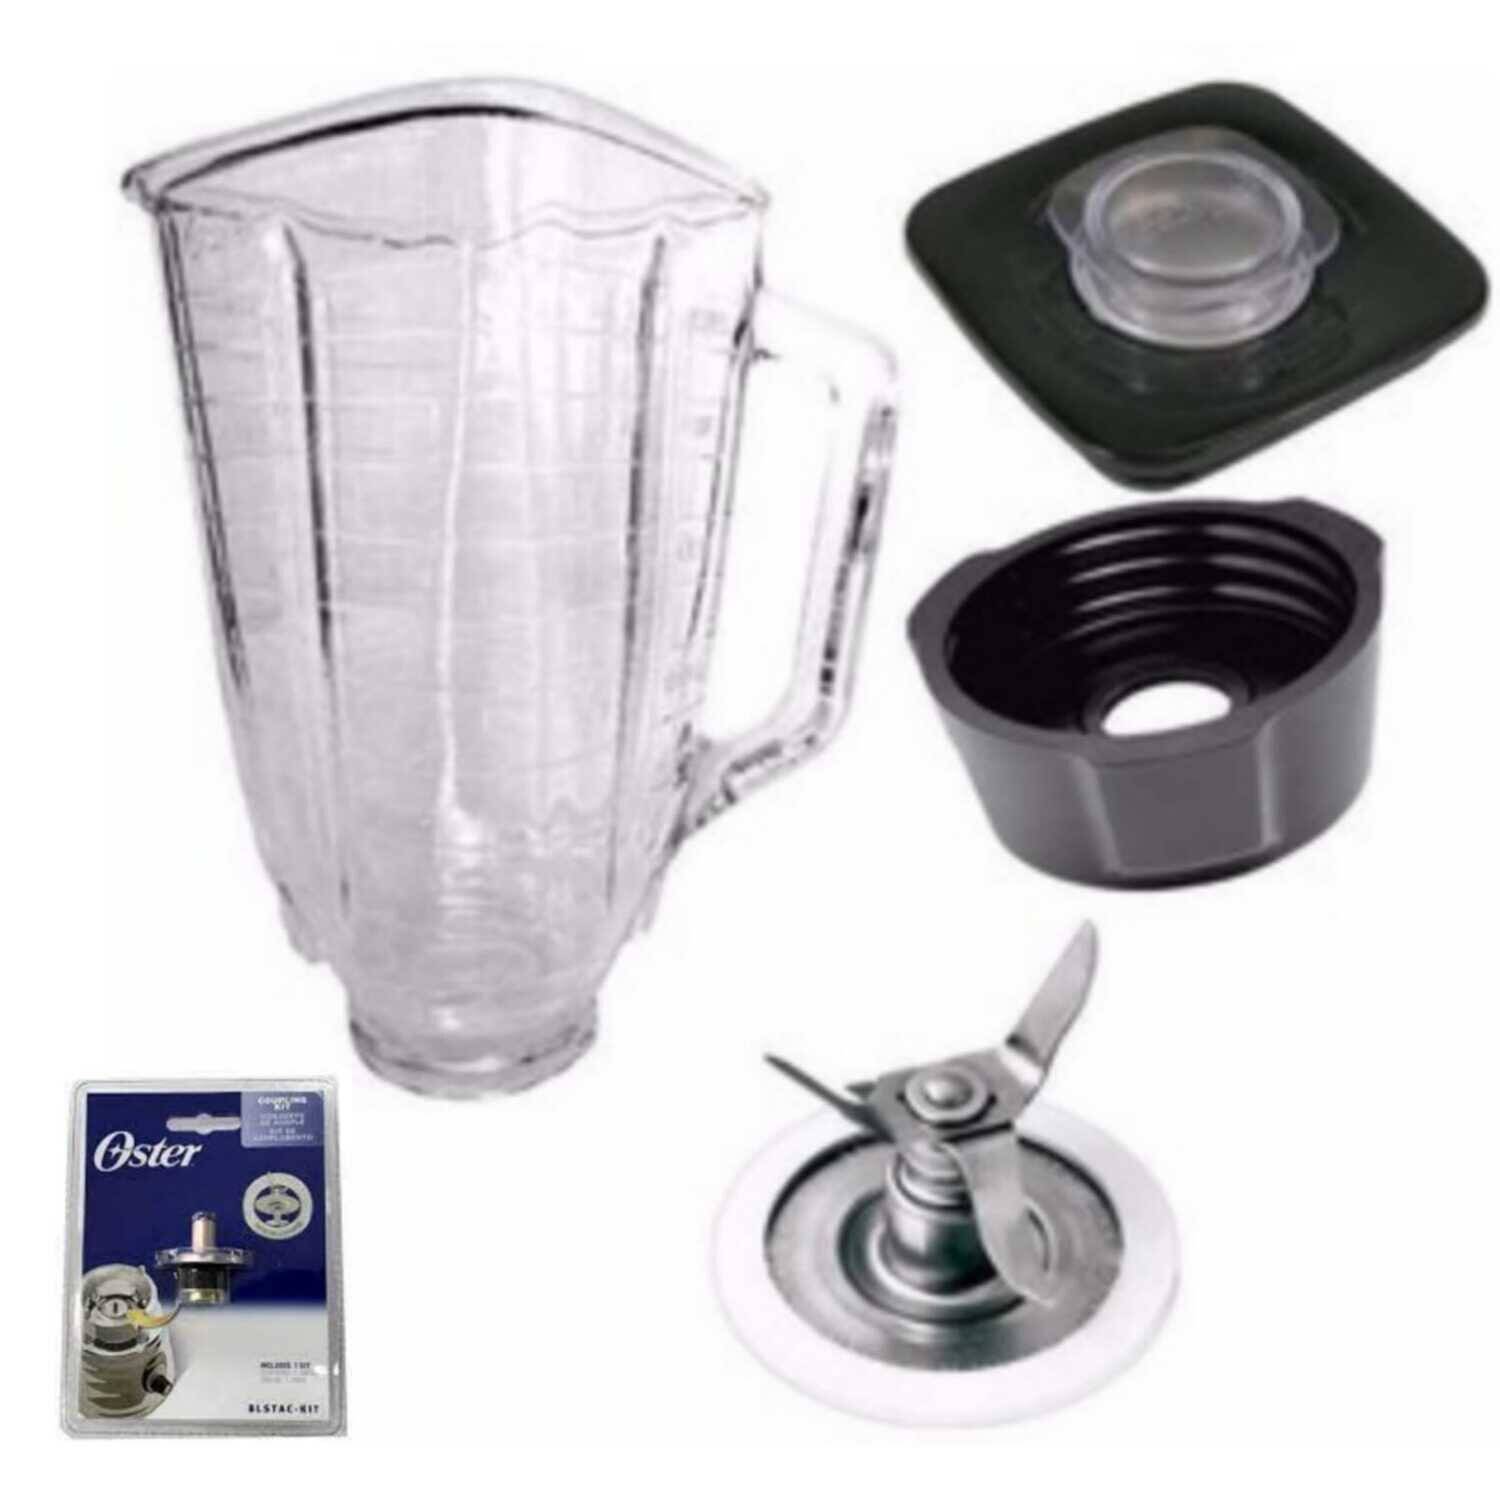 Kit de accesorios para licuadoras vaso,tapa,rosca,pin y cuchilla 4 aspas